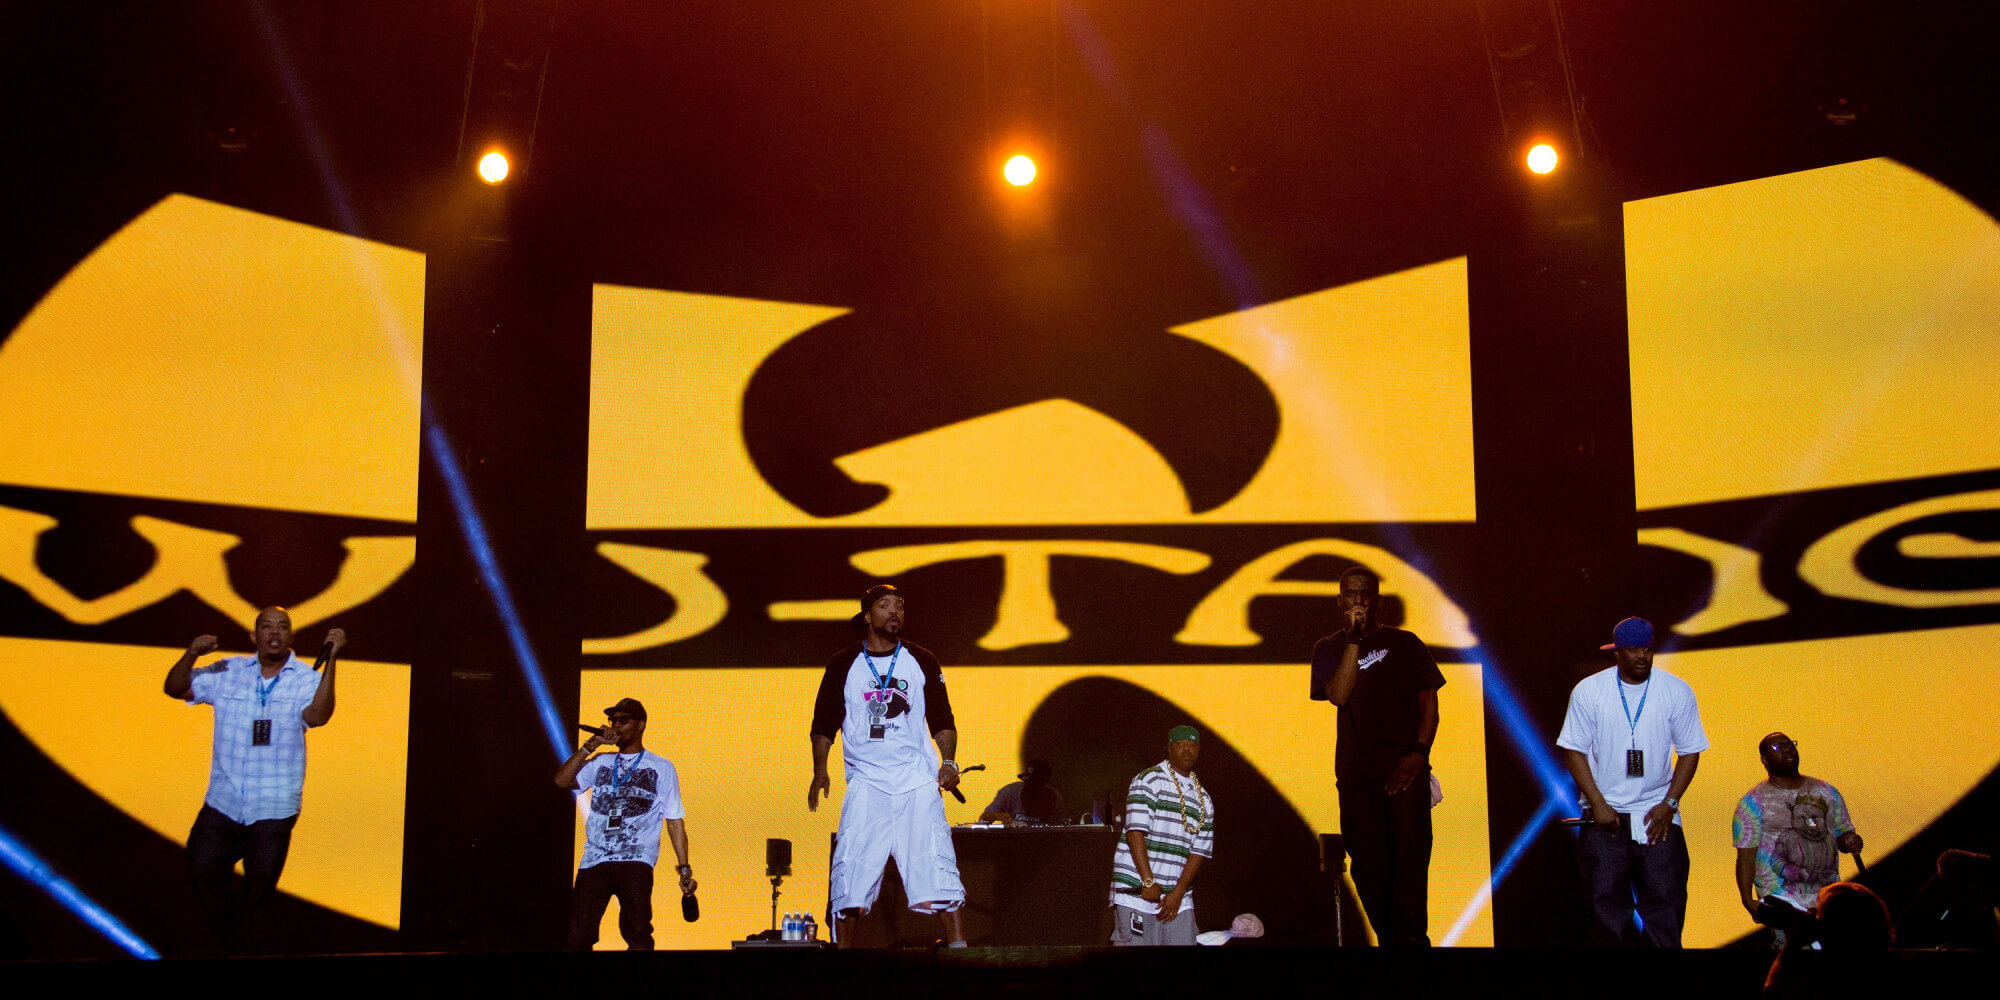 Snoop Dogg & Wu Tang Clan at Jiffy Lube Live